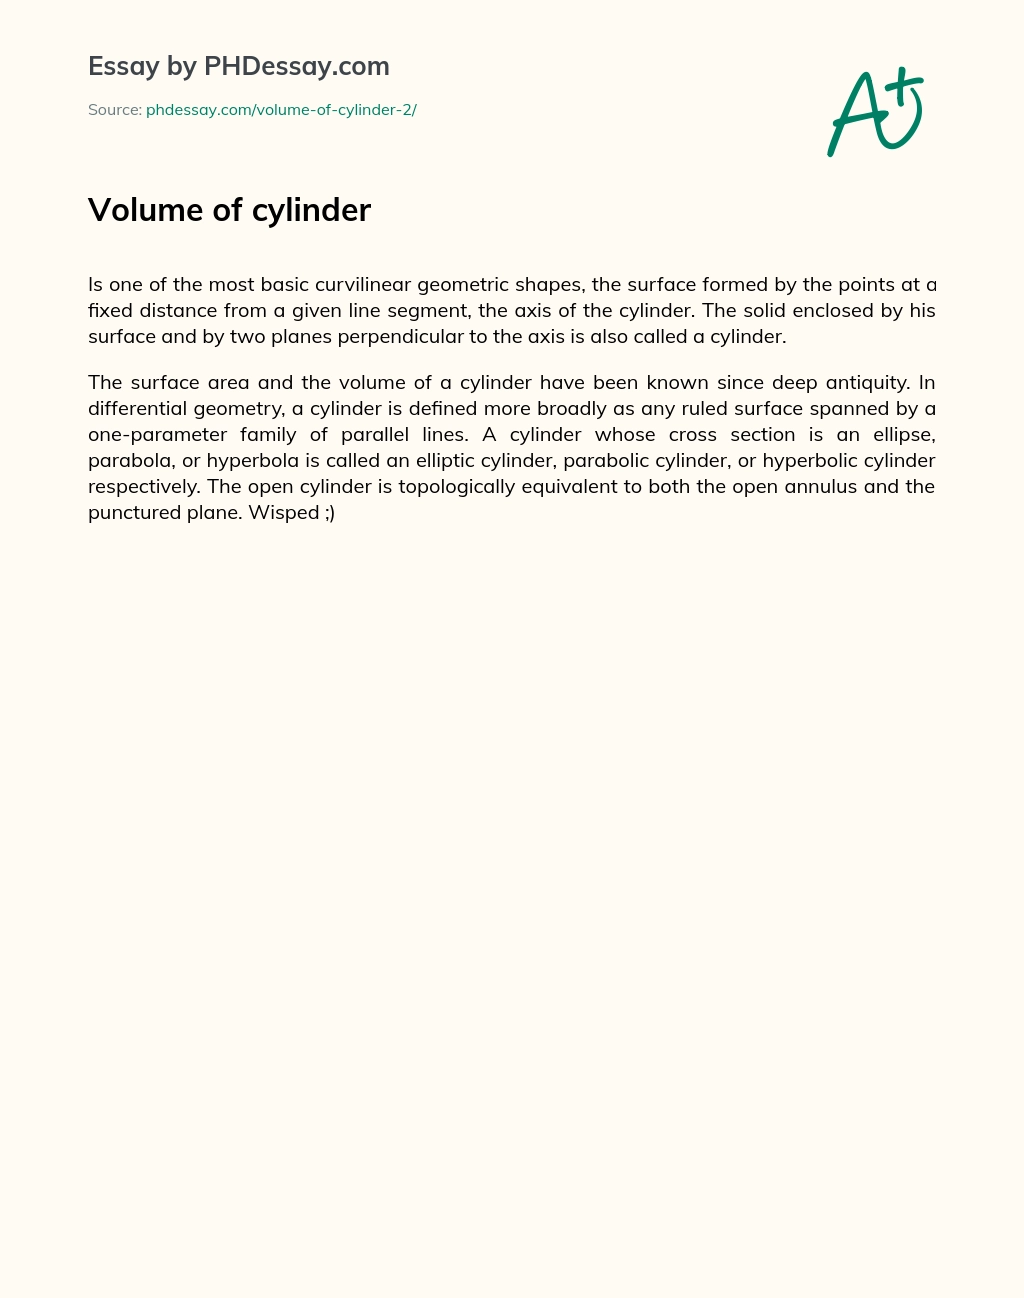 Volume of cylinder essay